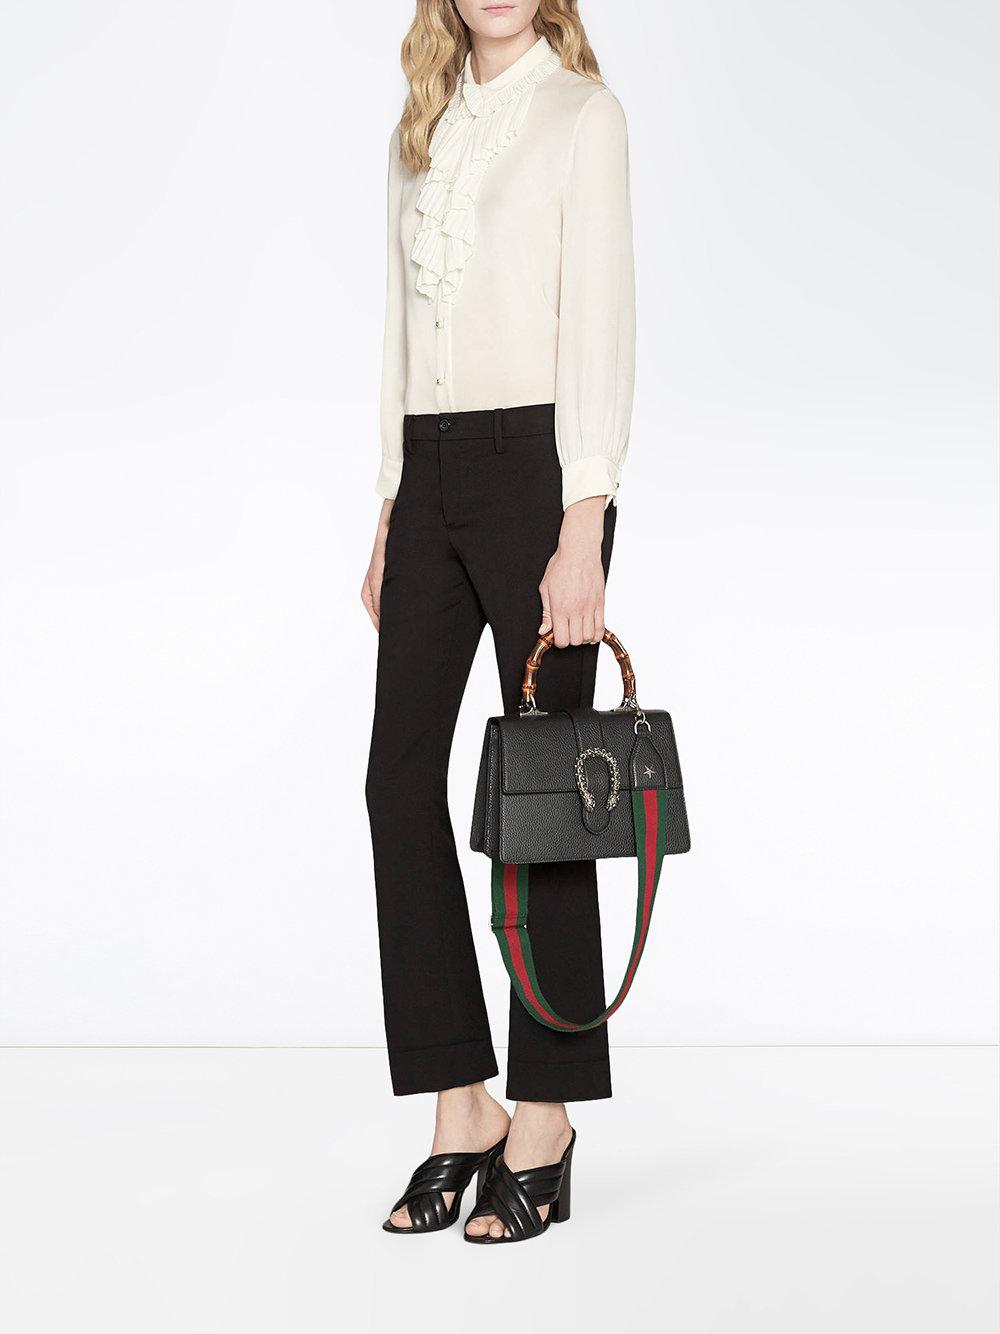 Gucci Dionysus Leather Top Handle Bag in Black | Lyst